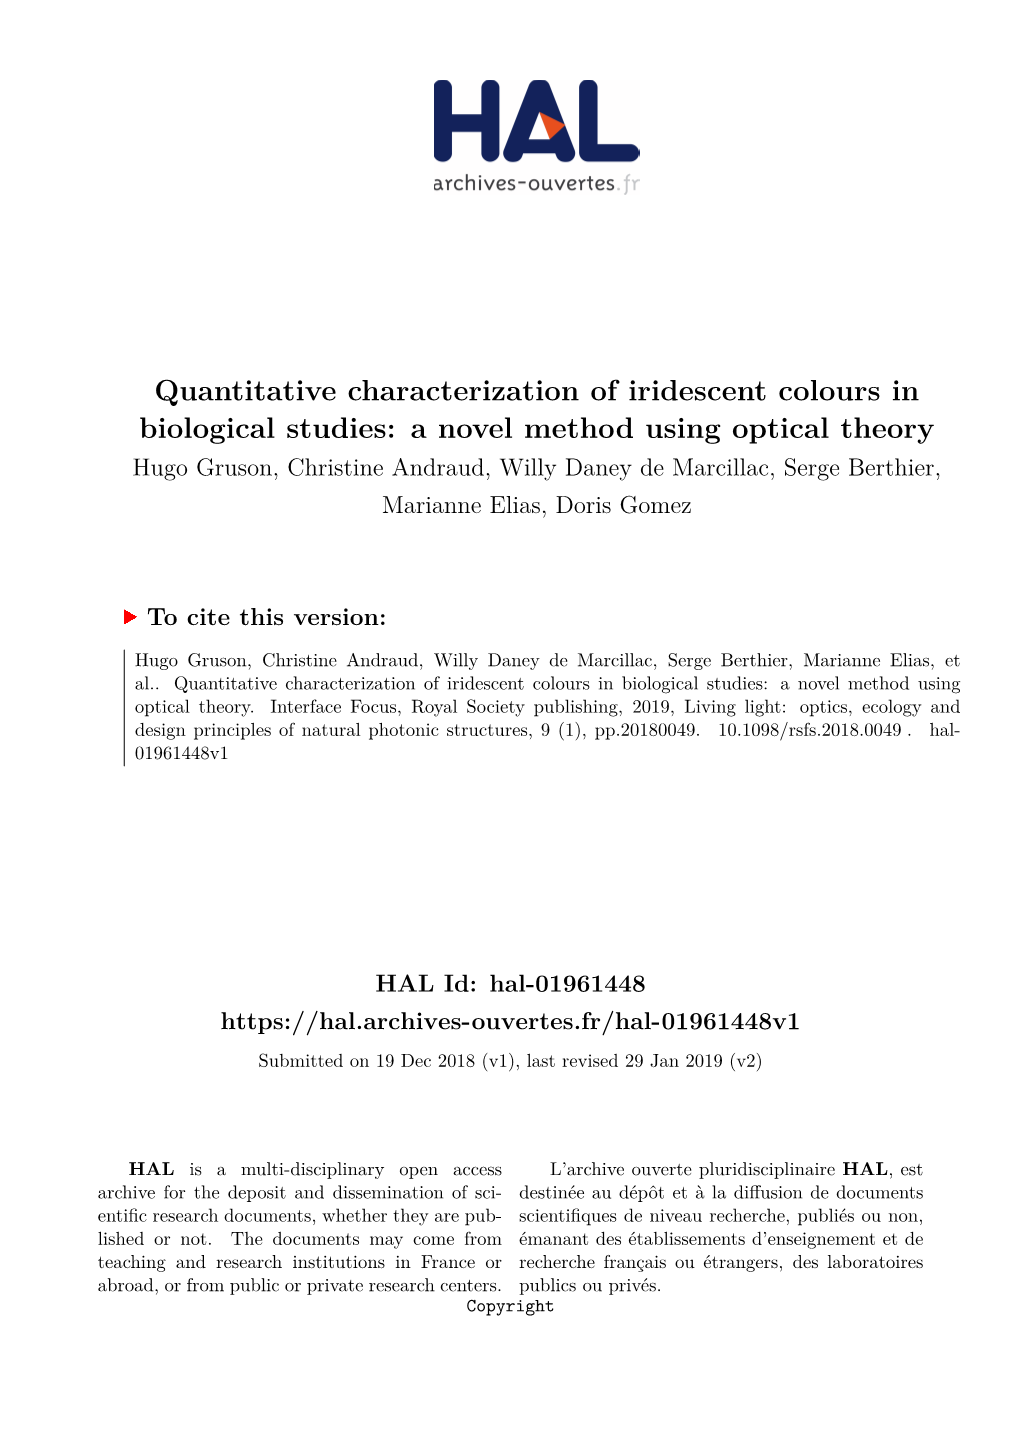 Quantitative Characterization of Iridescent Colours in Biological